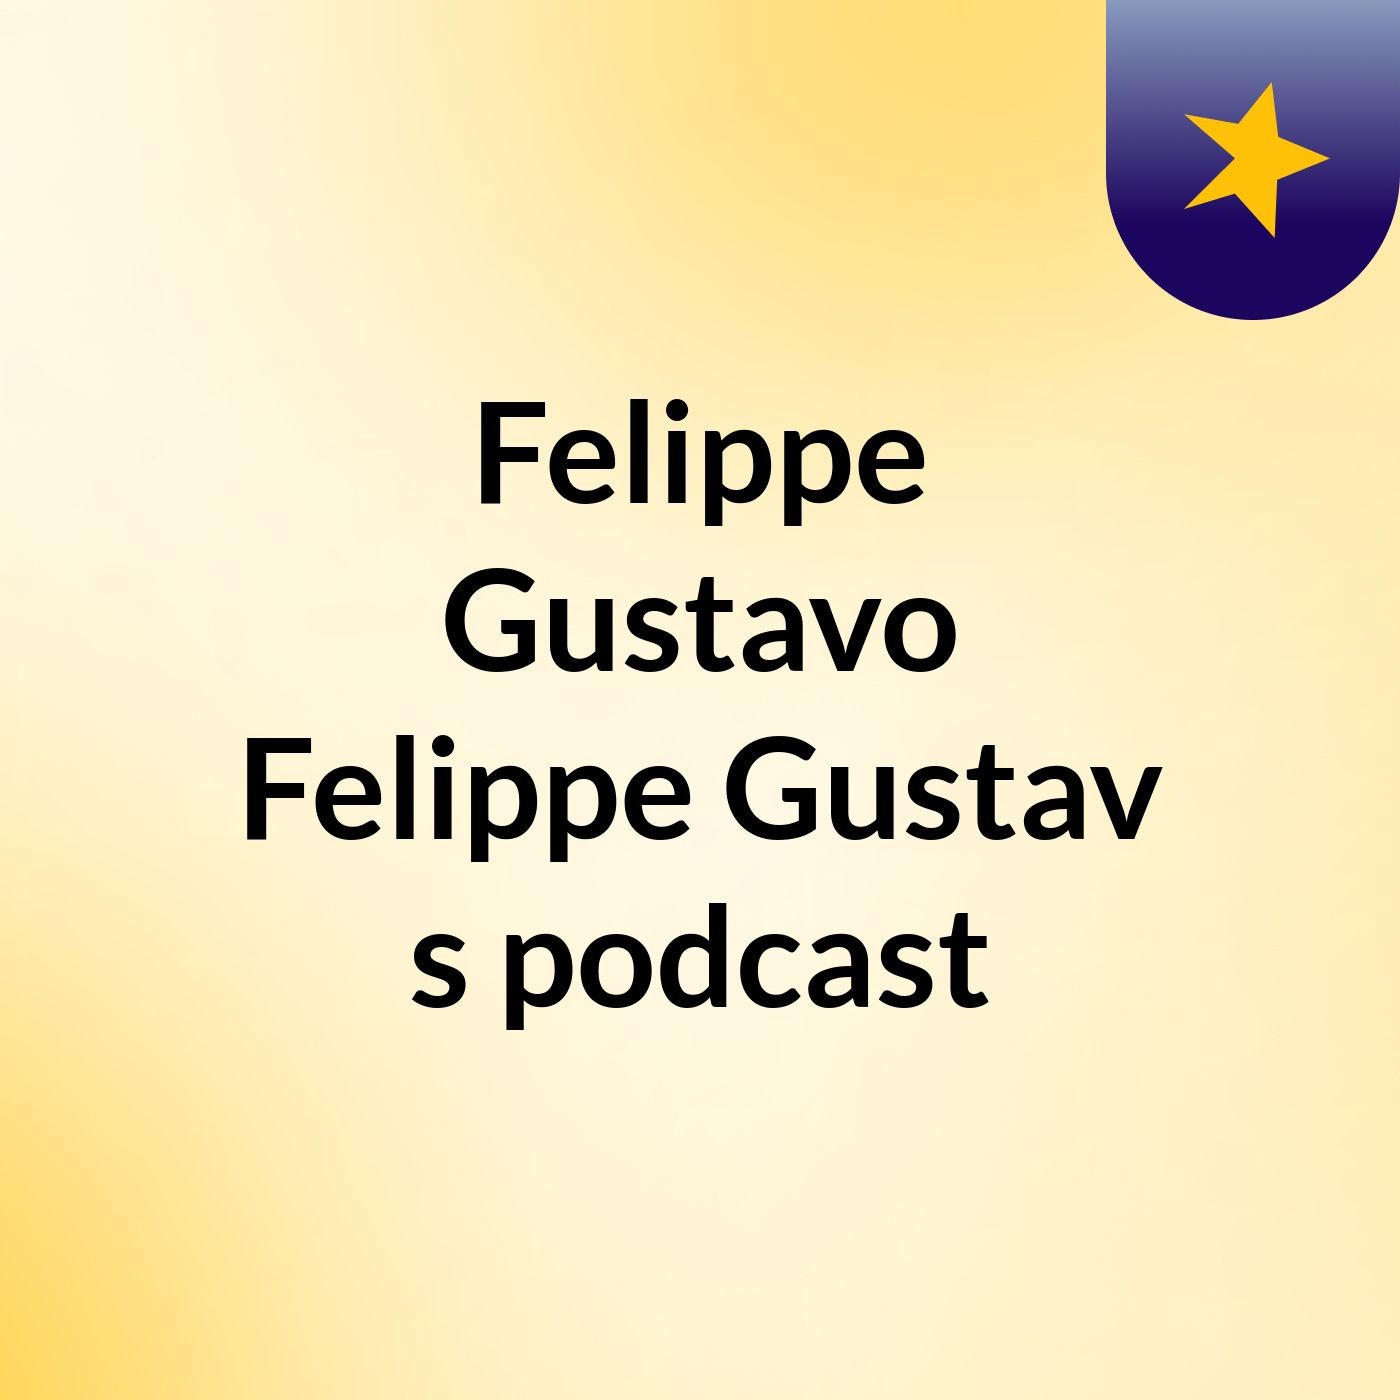 Felippe Gustavo Felippe Gustav's podcast